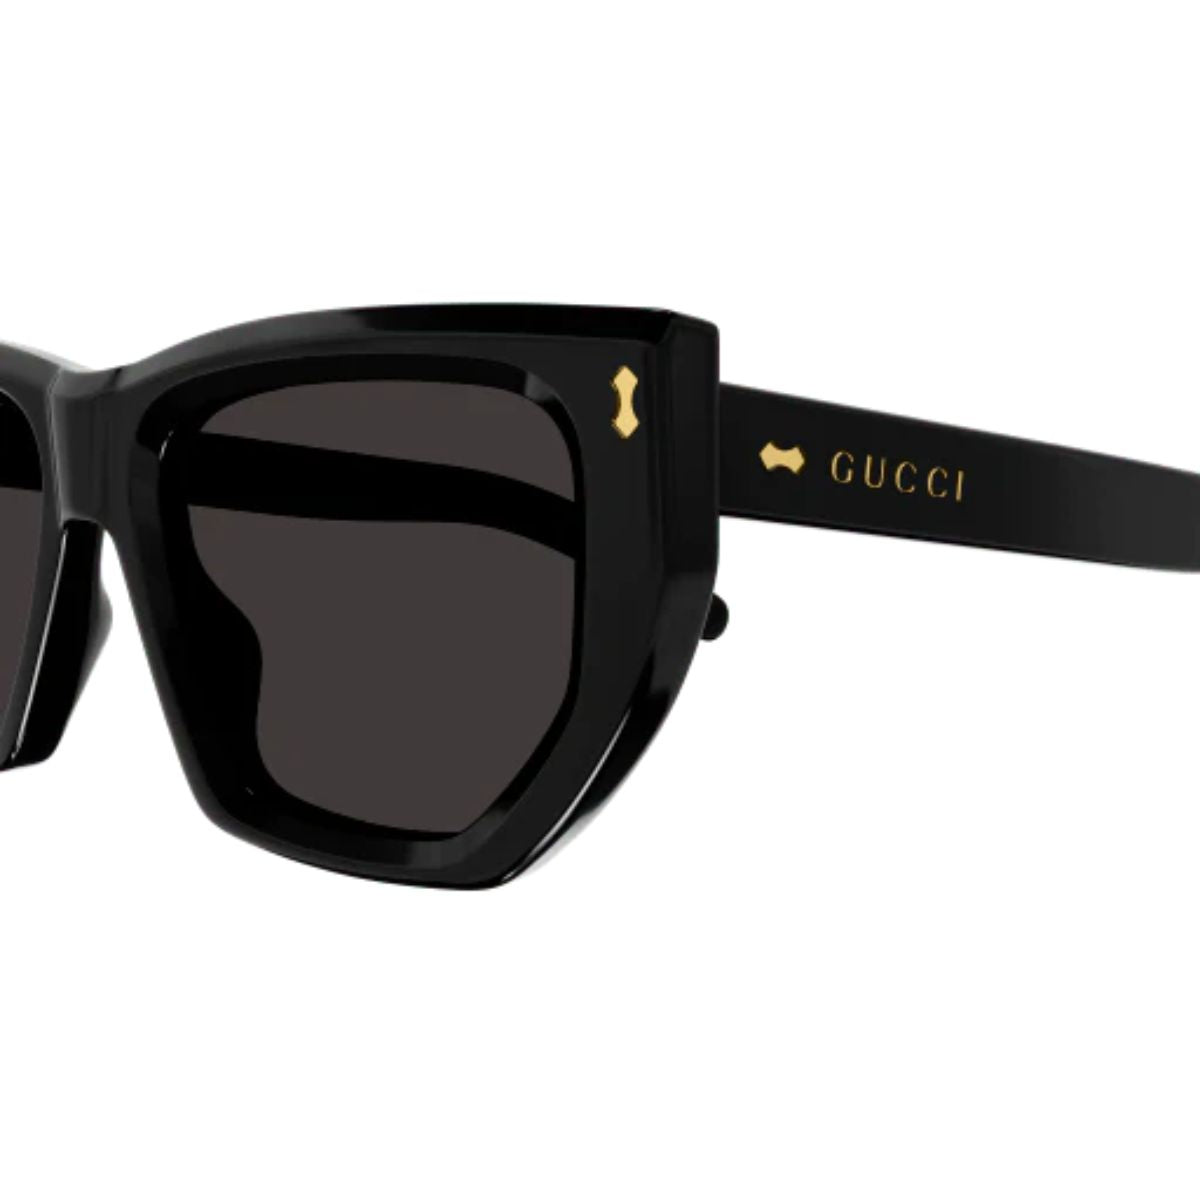 "Fashionable Women's Gucci Eyewear - 1520S 001 Sunglasses"